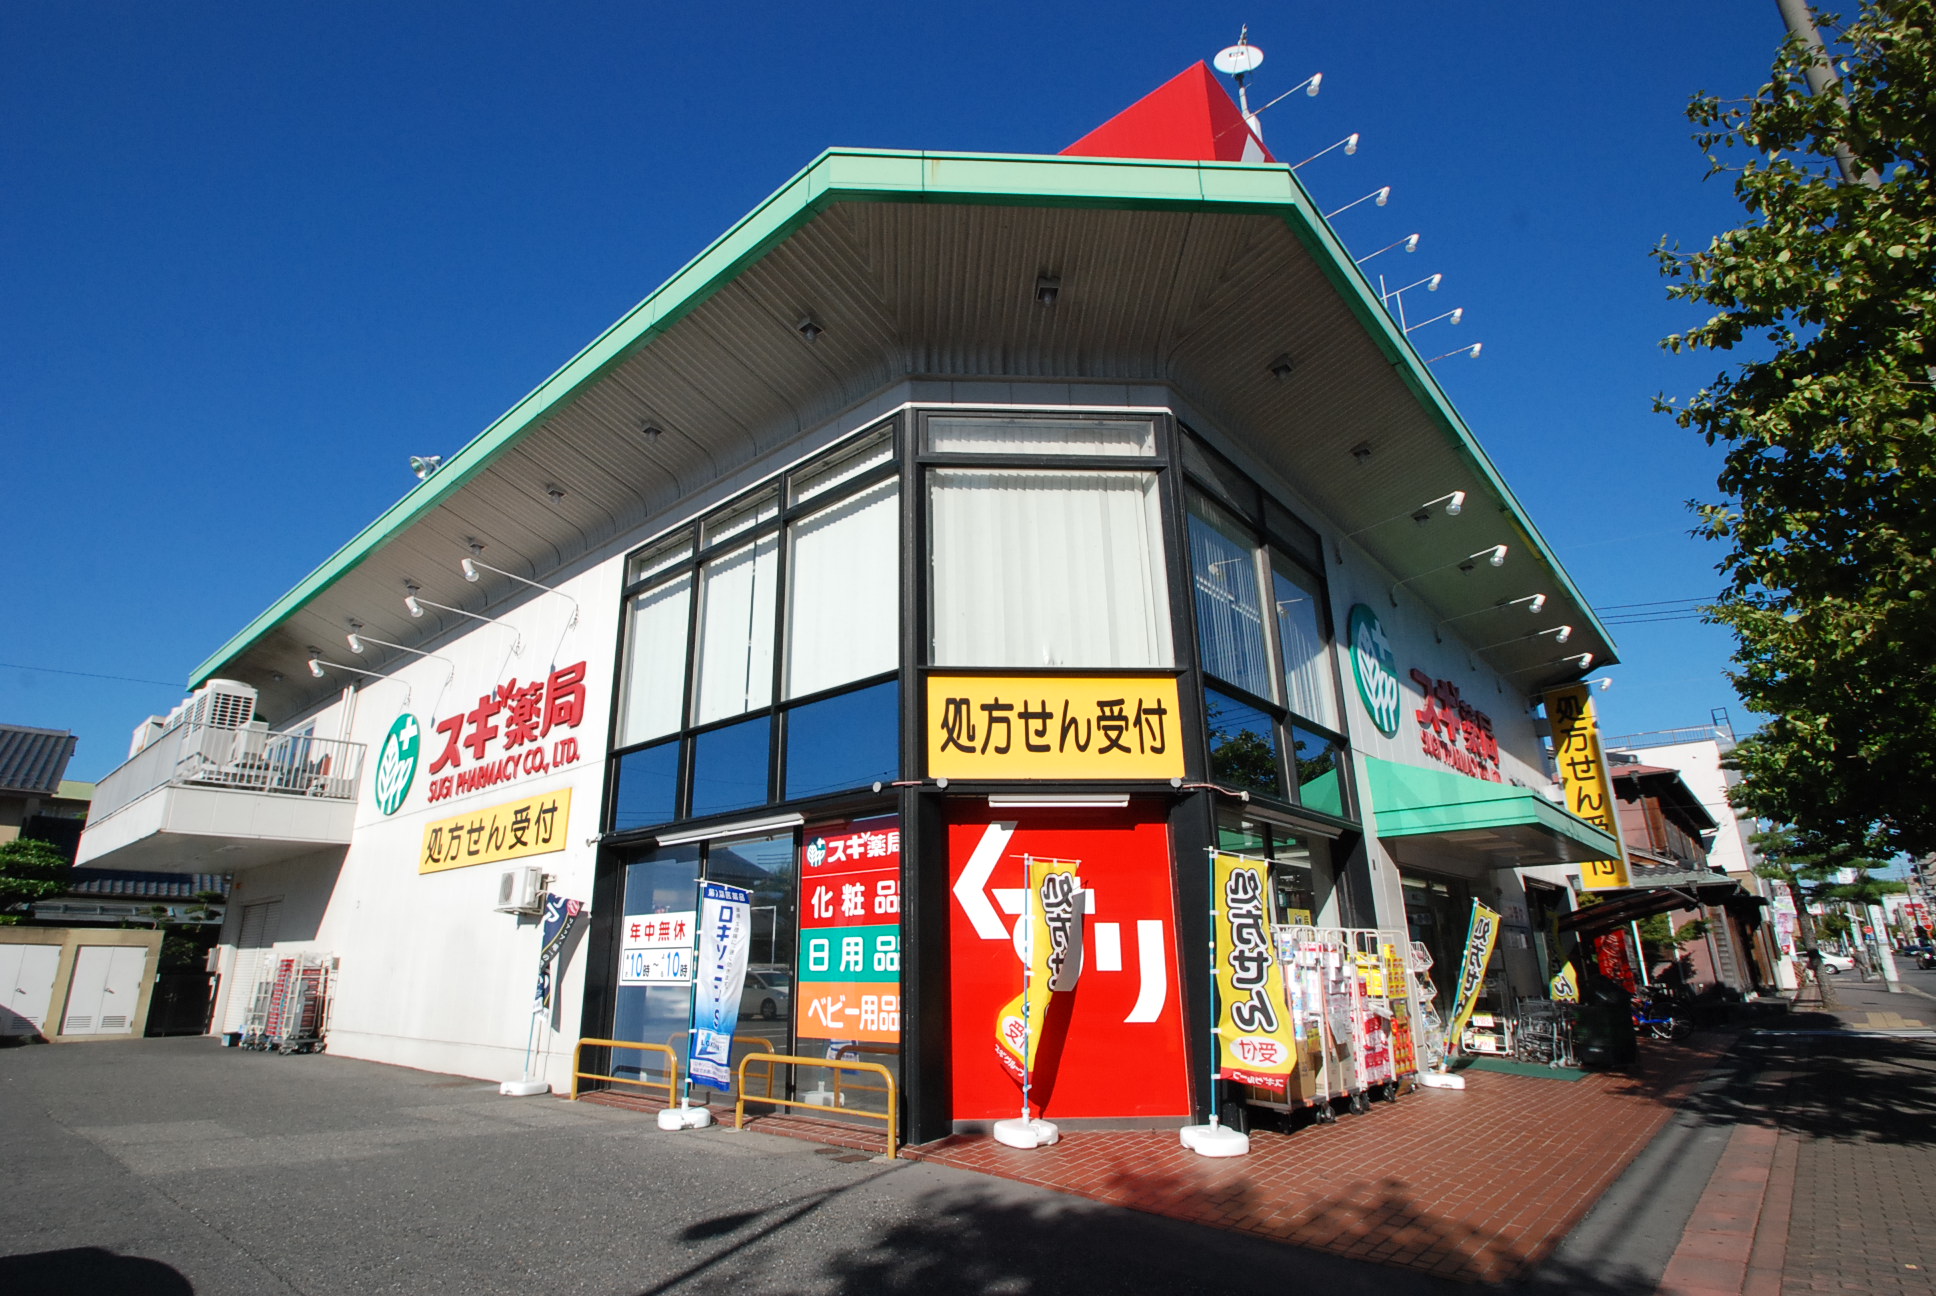 Dorakkusutoa. Cedar pharmacy Obata shop 952m until (drugstore)